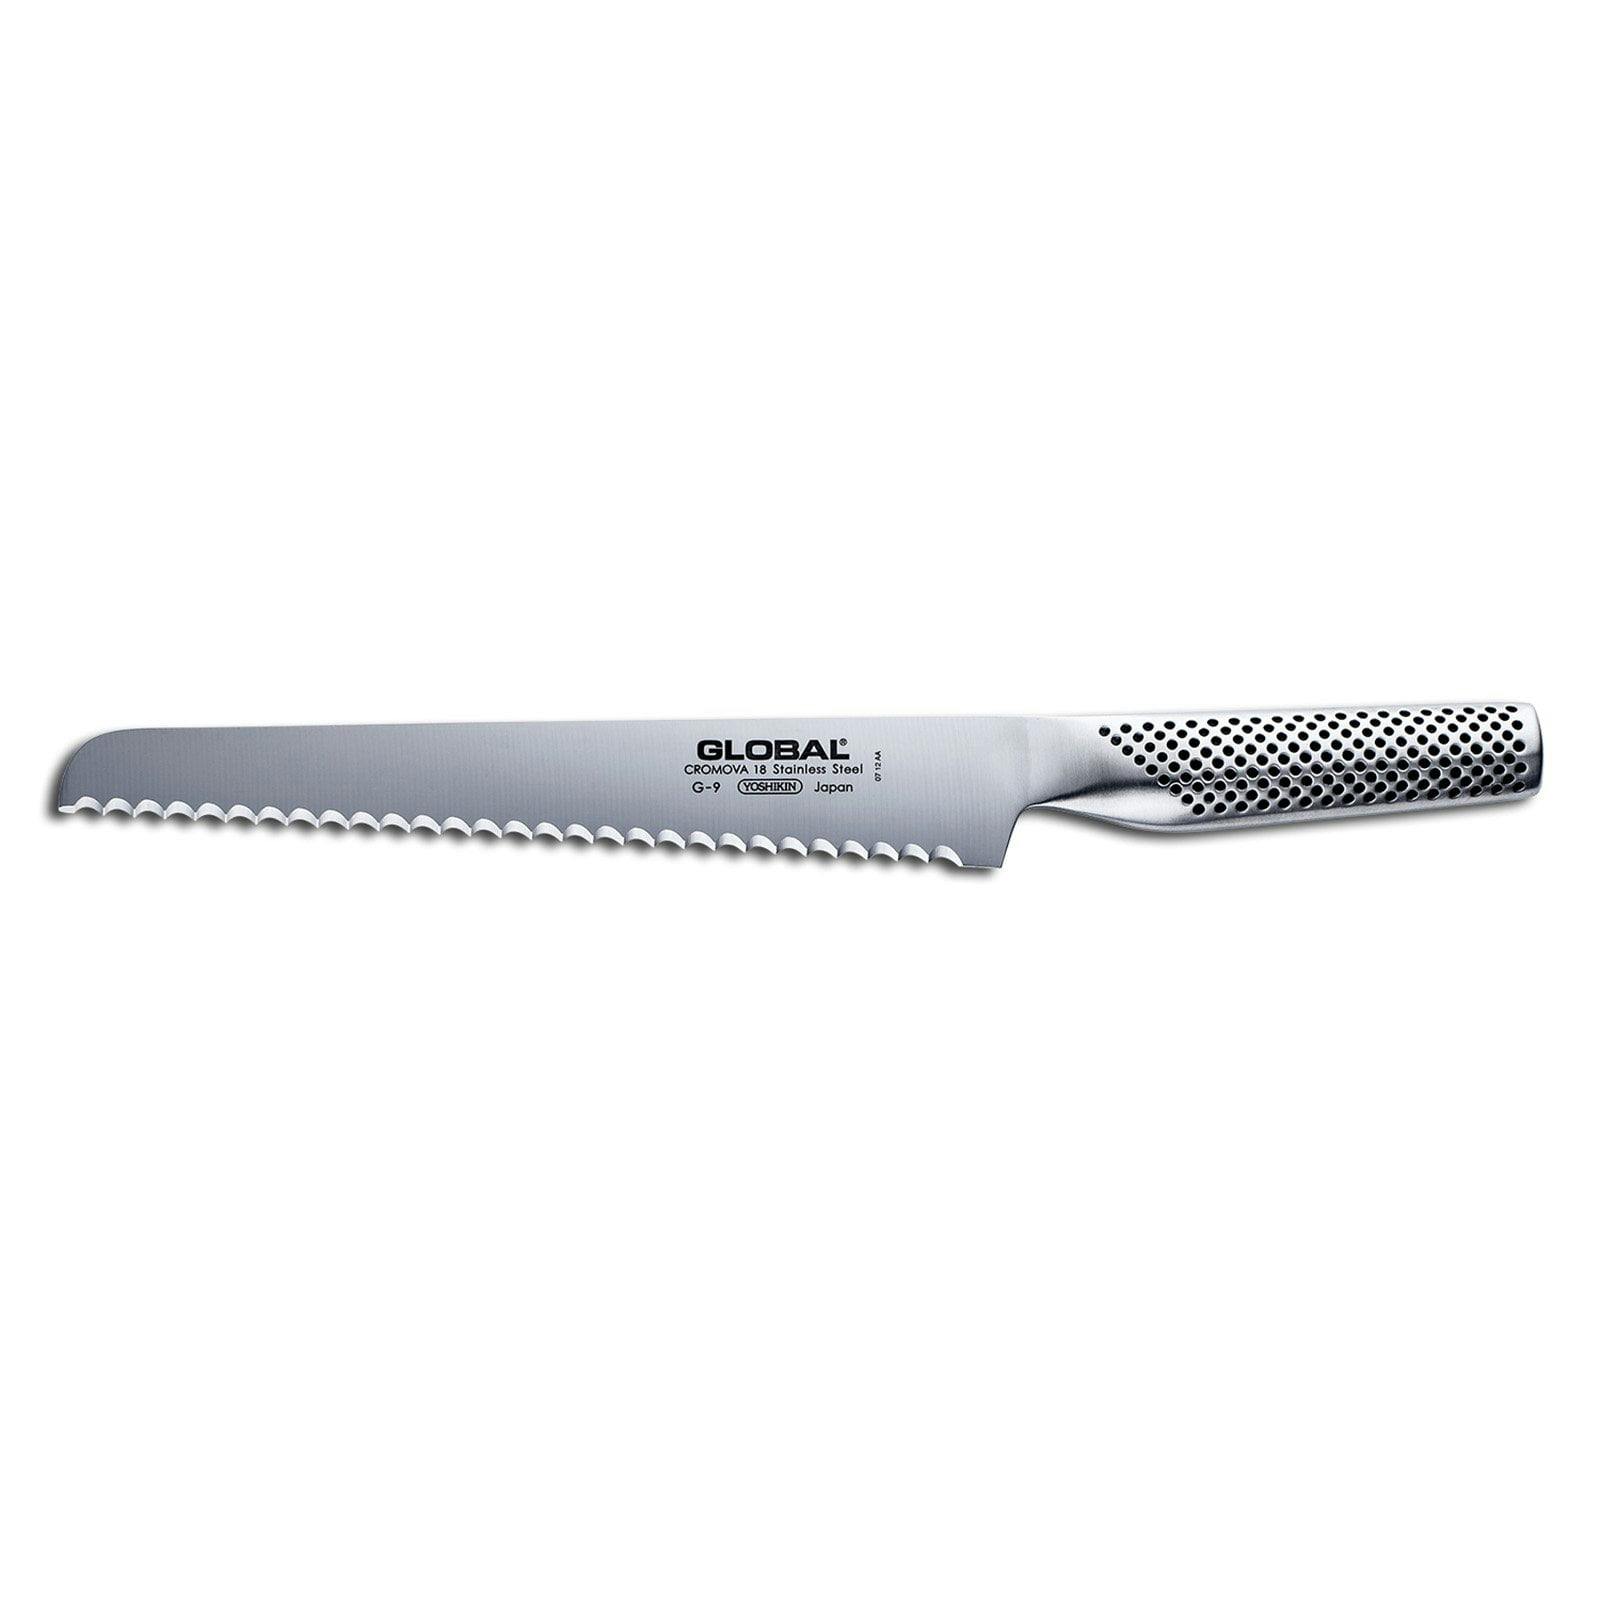 Sleek 8.5-Inch Global Bread Knife with CROMOVA 18 Stainless Steel Blade